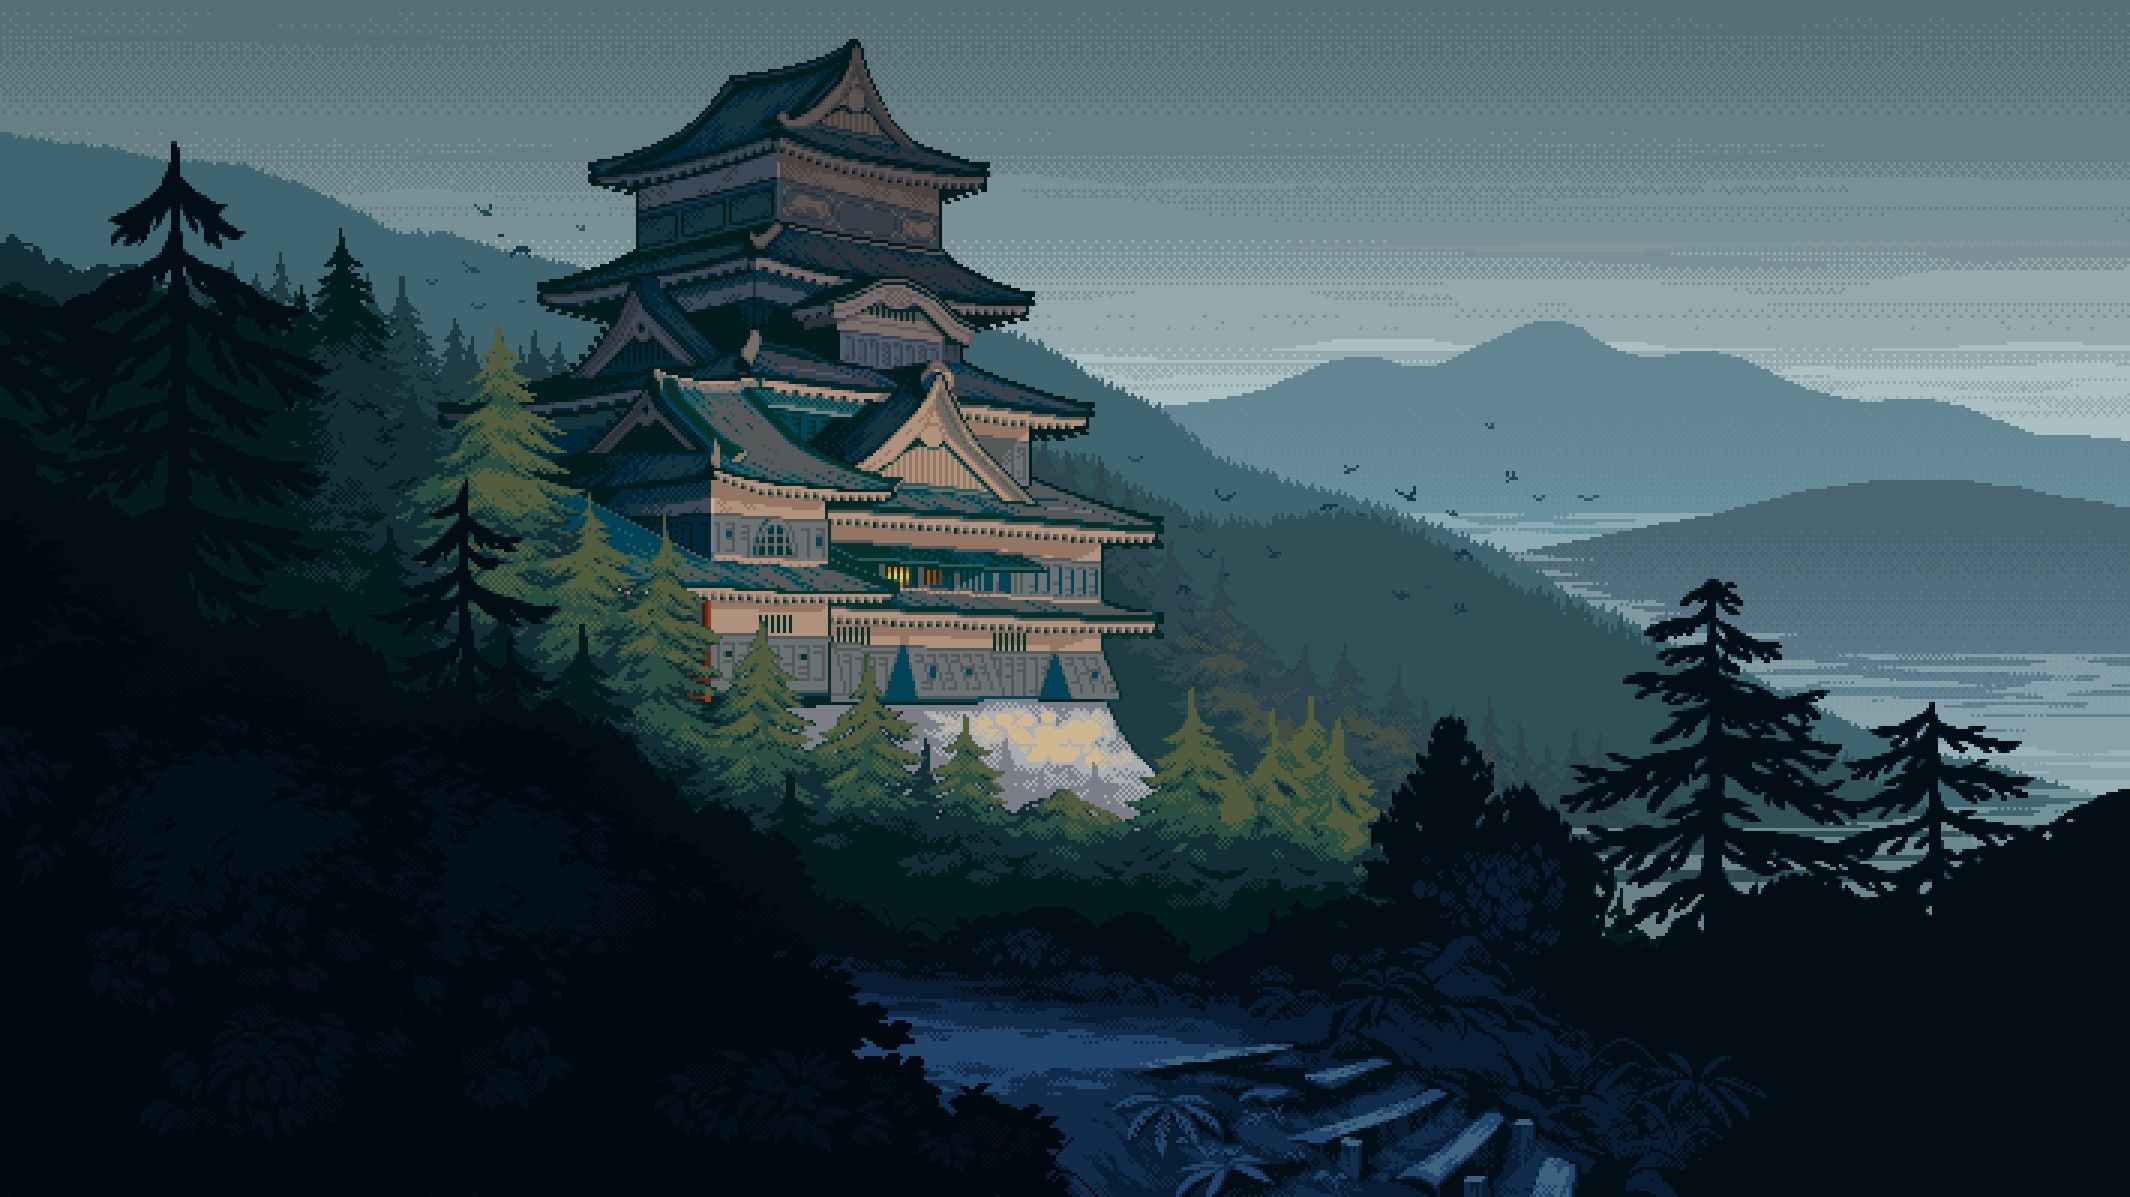 Japanese Castle Pixel Art Wallpaper, HD Artist 4K Wallpaper, Image, Photo and Background